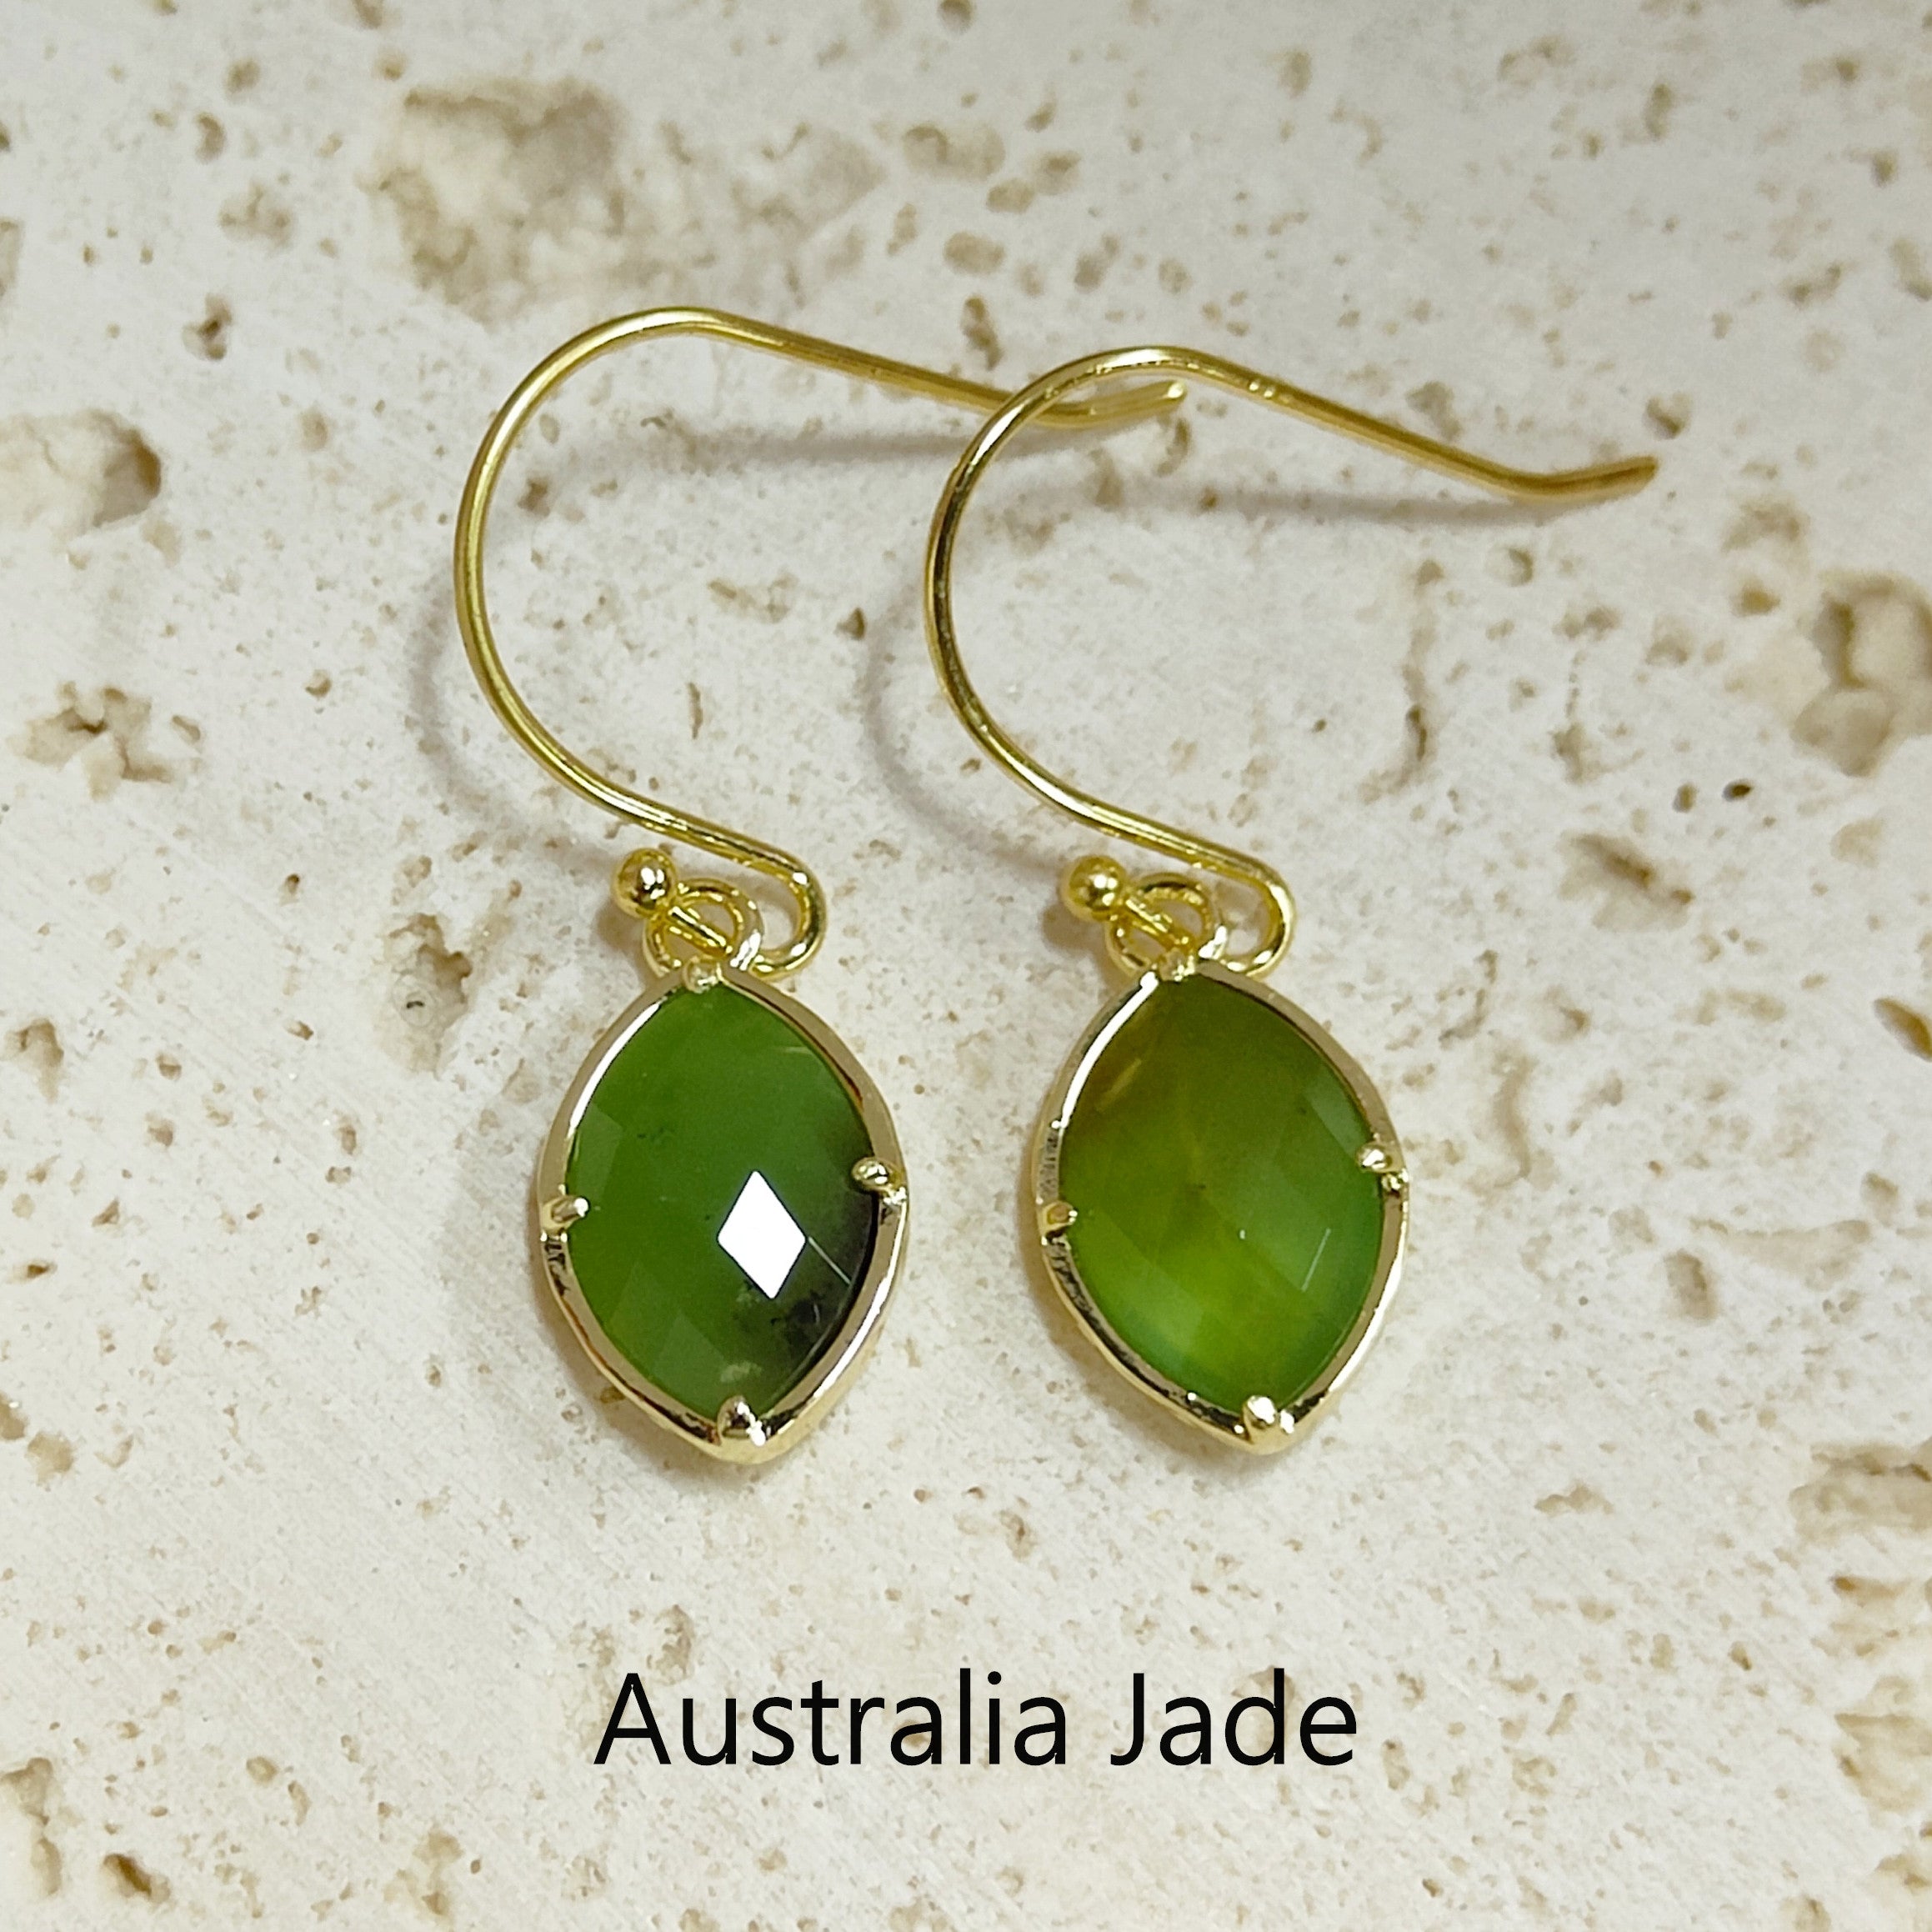 Australia jade earrings Wholesale Gold Plated Marquise Gemstone Earrings, Healing Crystals Stone Earrings Jewelry AL573